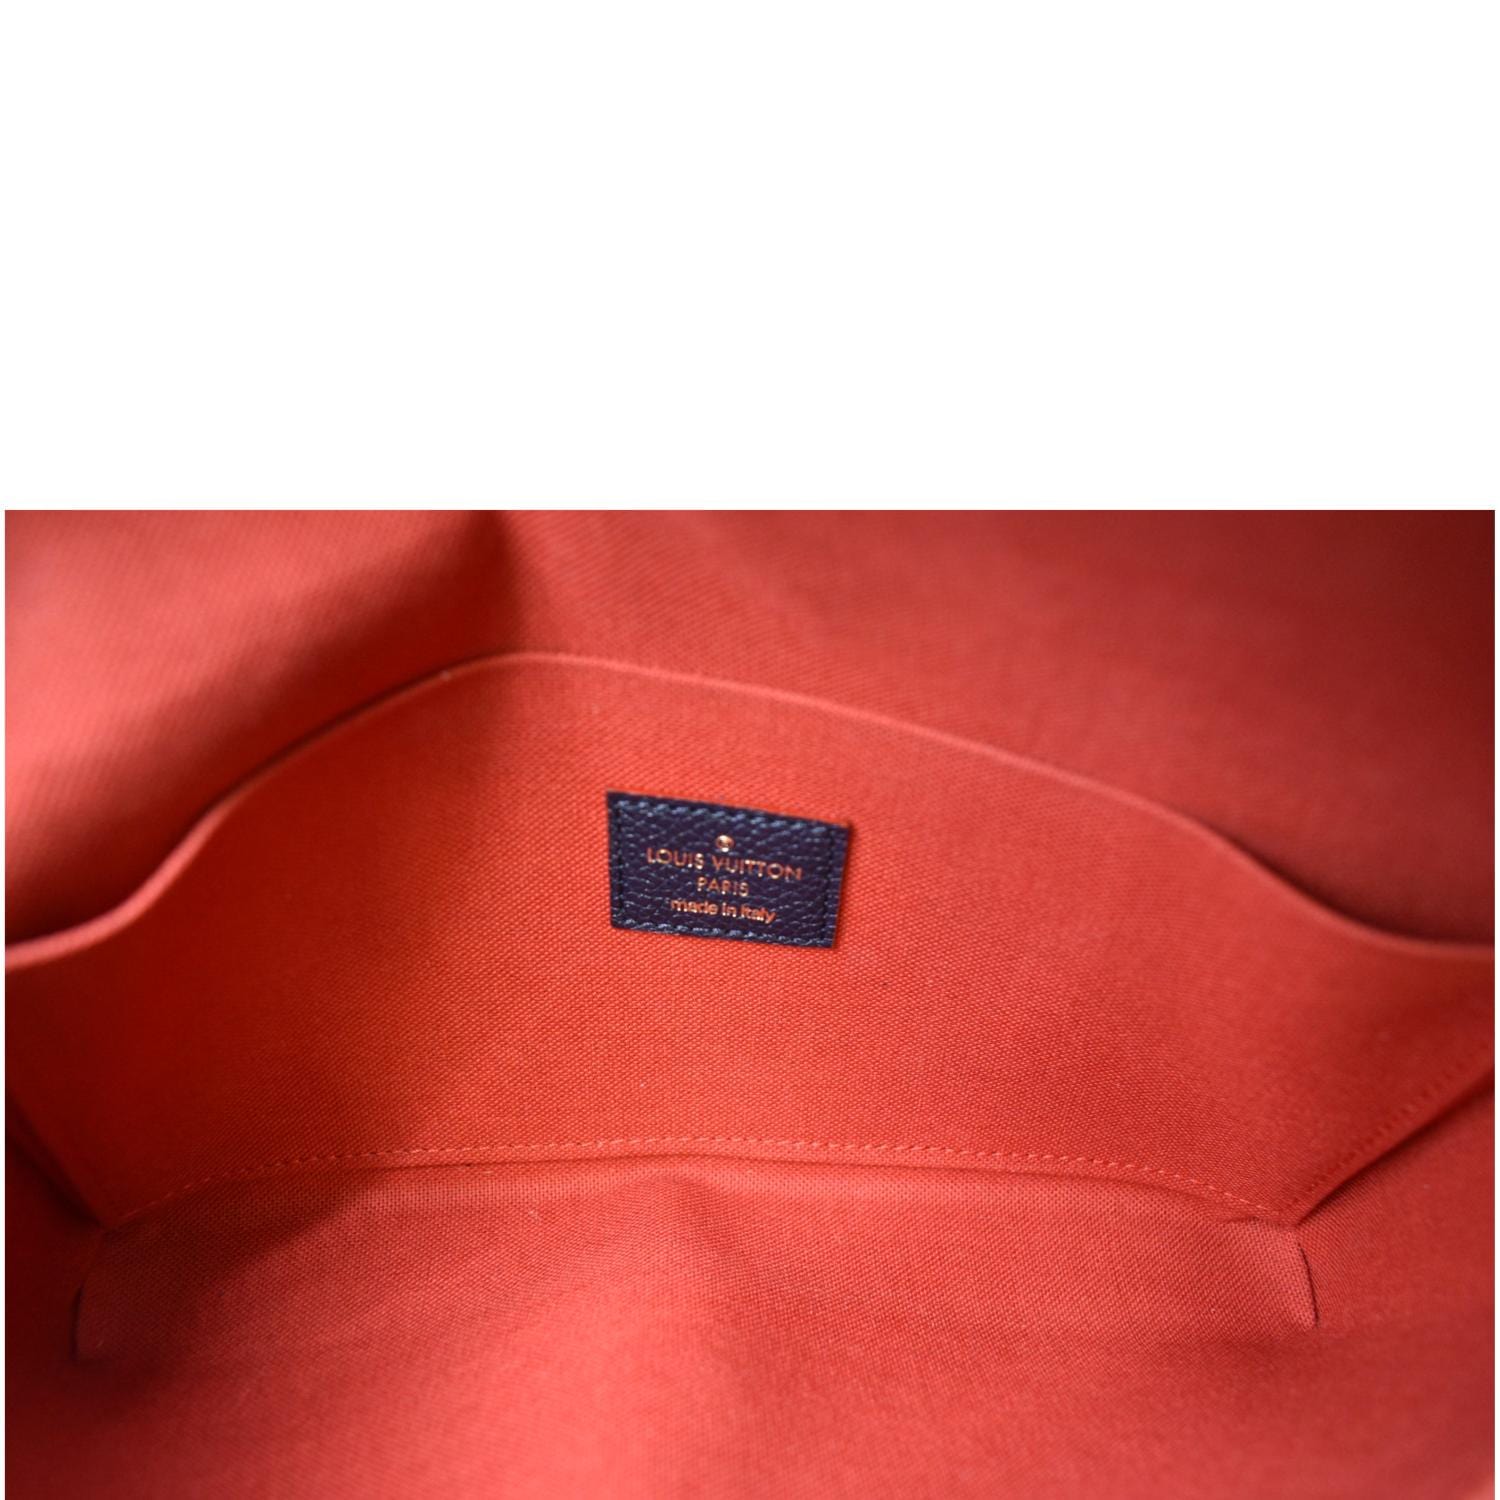 LOUIS VUITTON Louis Vuitton Taiga Pochette Voyage MM Second Bag Clutch Blue  Marine Navy Red M63394